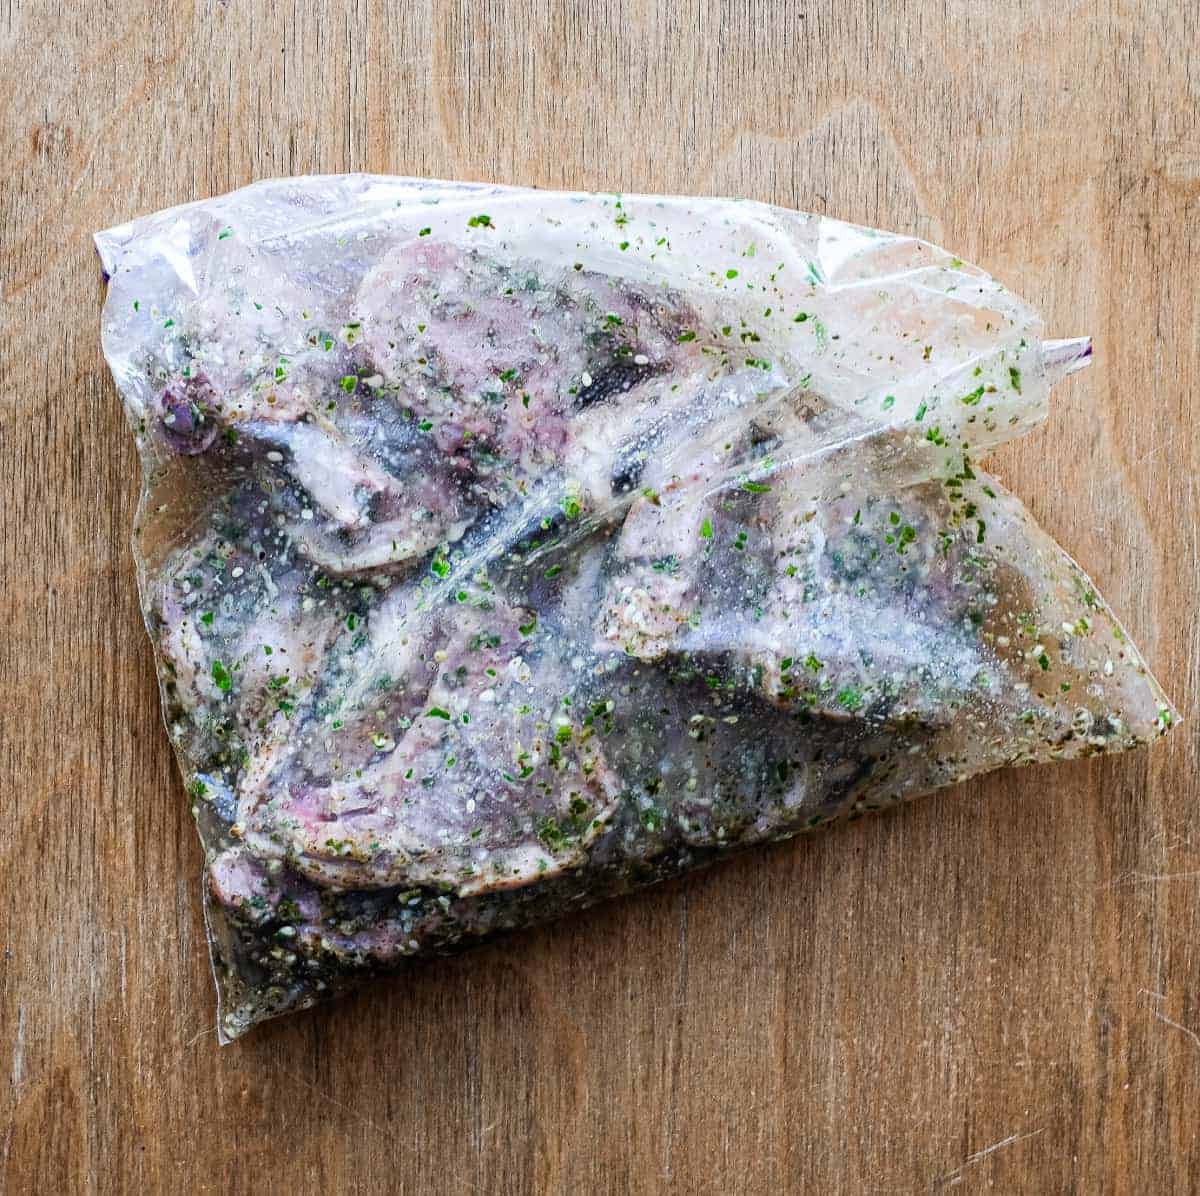 Lamb marinating in a large sealed plastic bag.